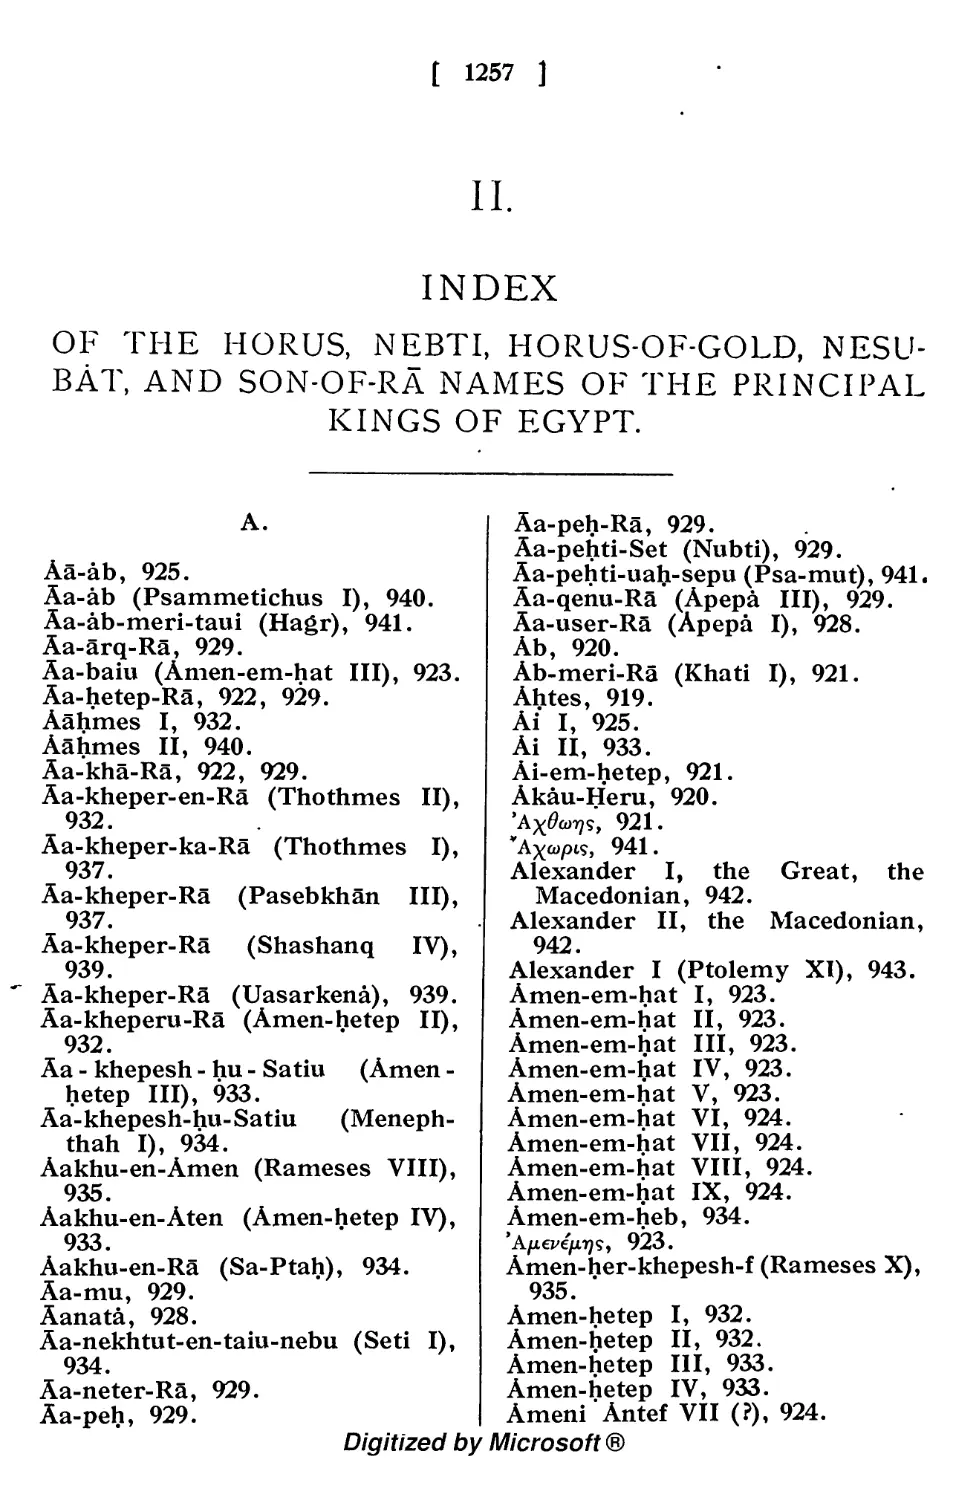 Index of Kings' Names